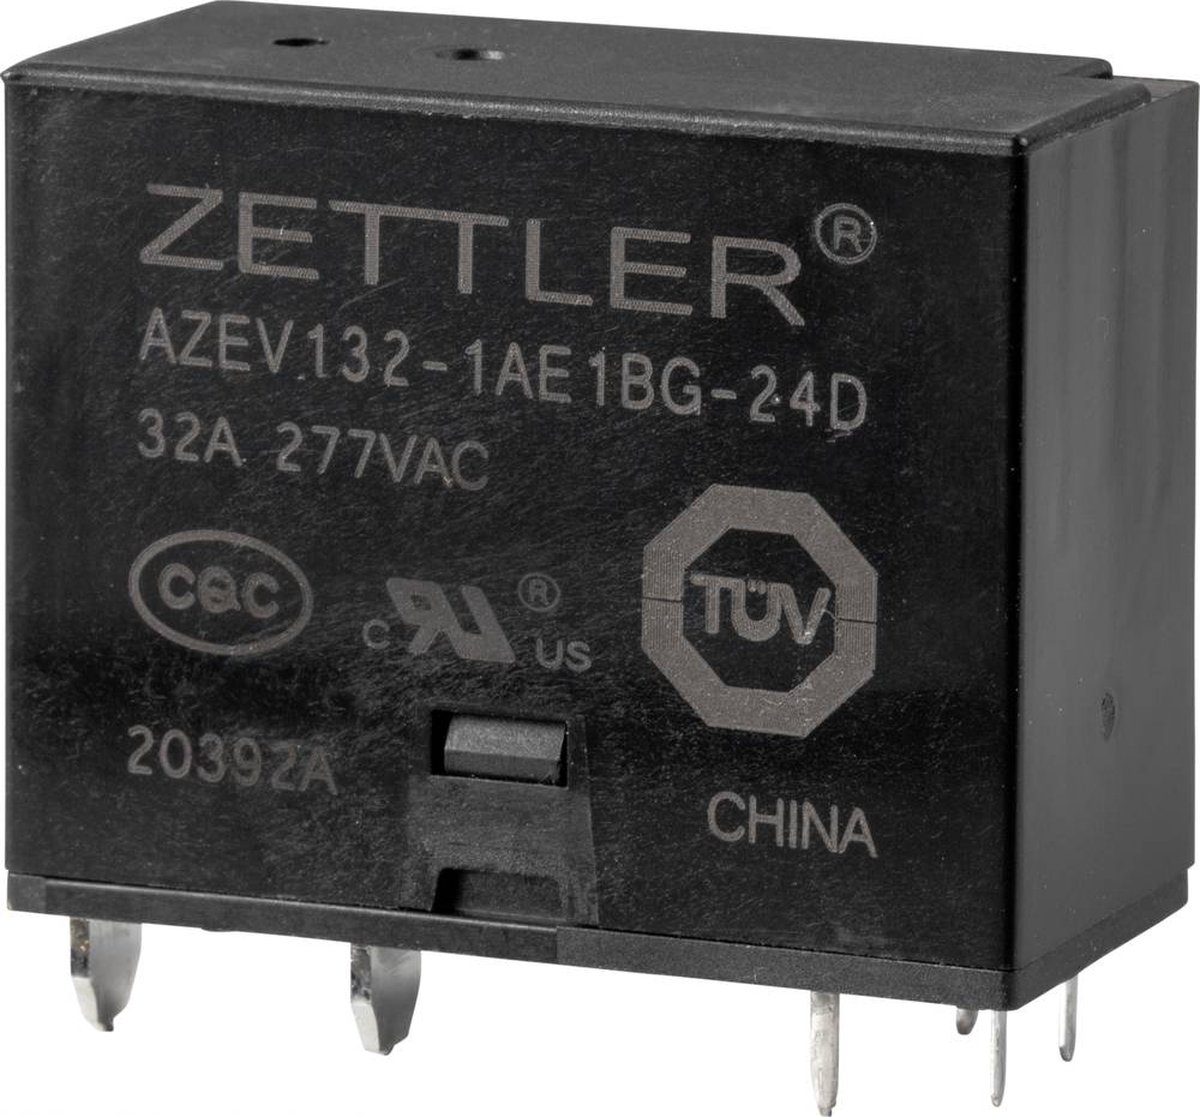 Zettler Electronics Zettler electronics Powerrelais 24 V/DC 32 A 1x NO 1 stuk(s)